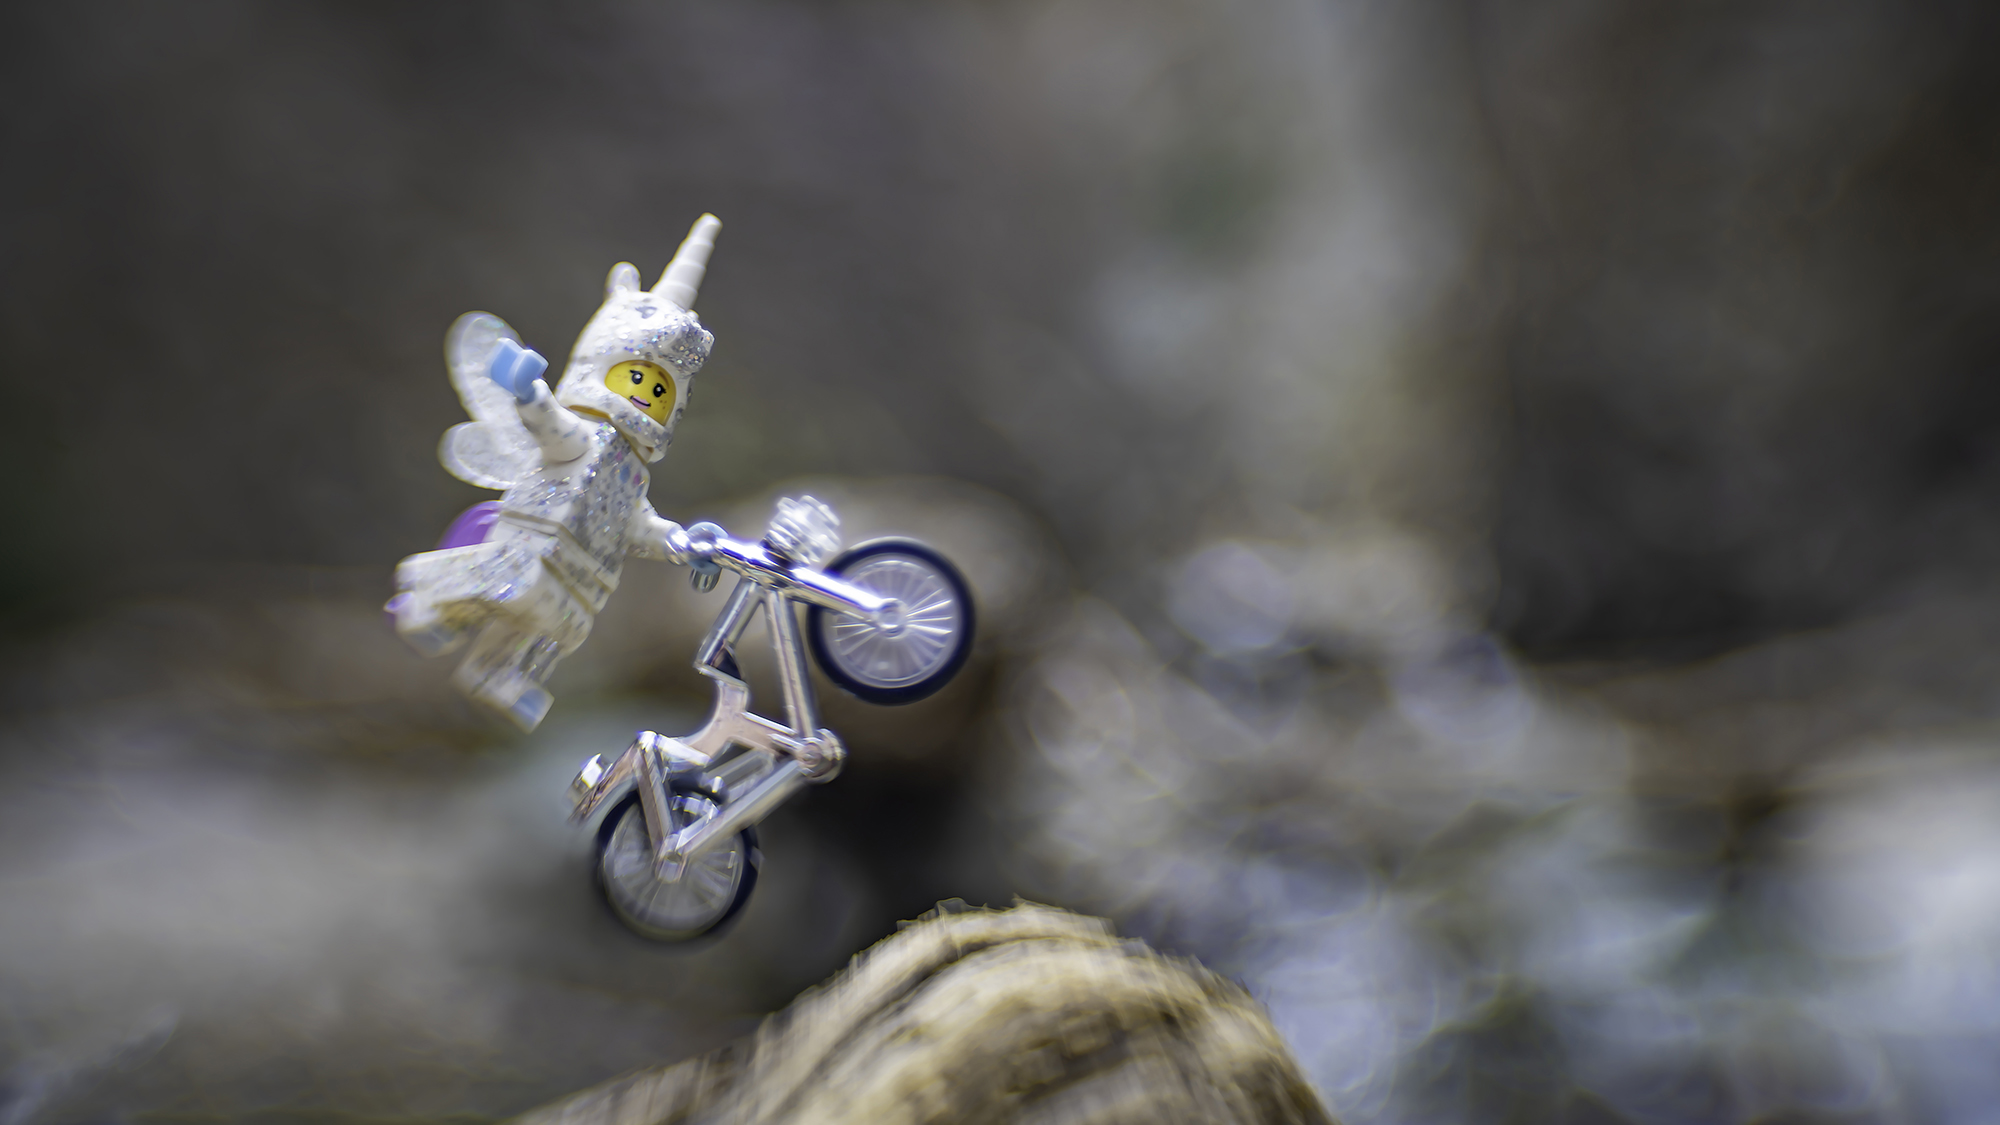 Lego-unicorn-bicycle-Shelly-Corbett